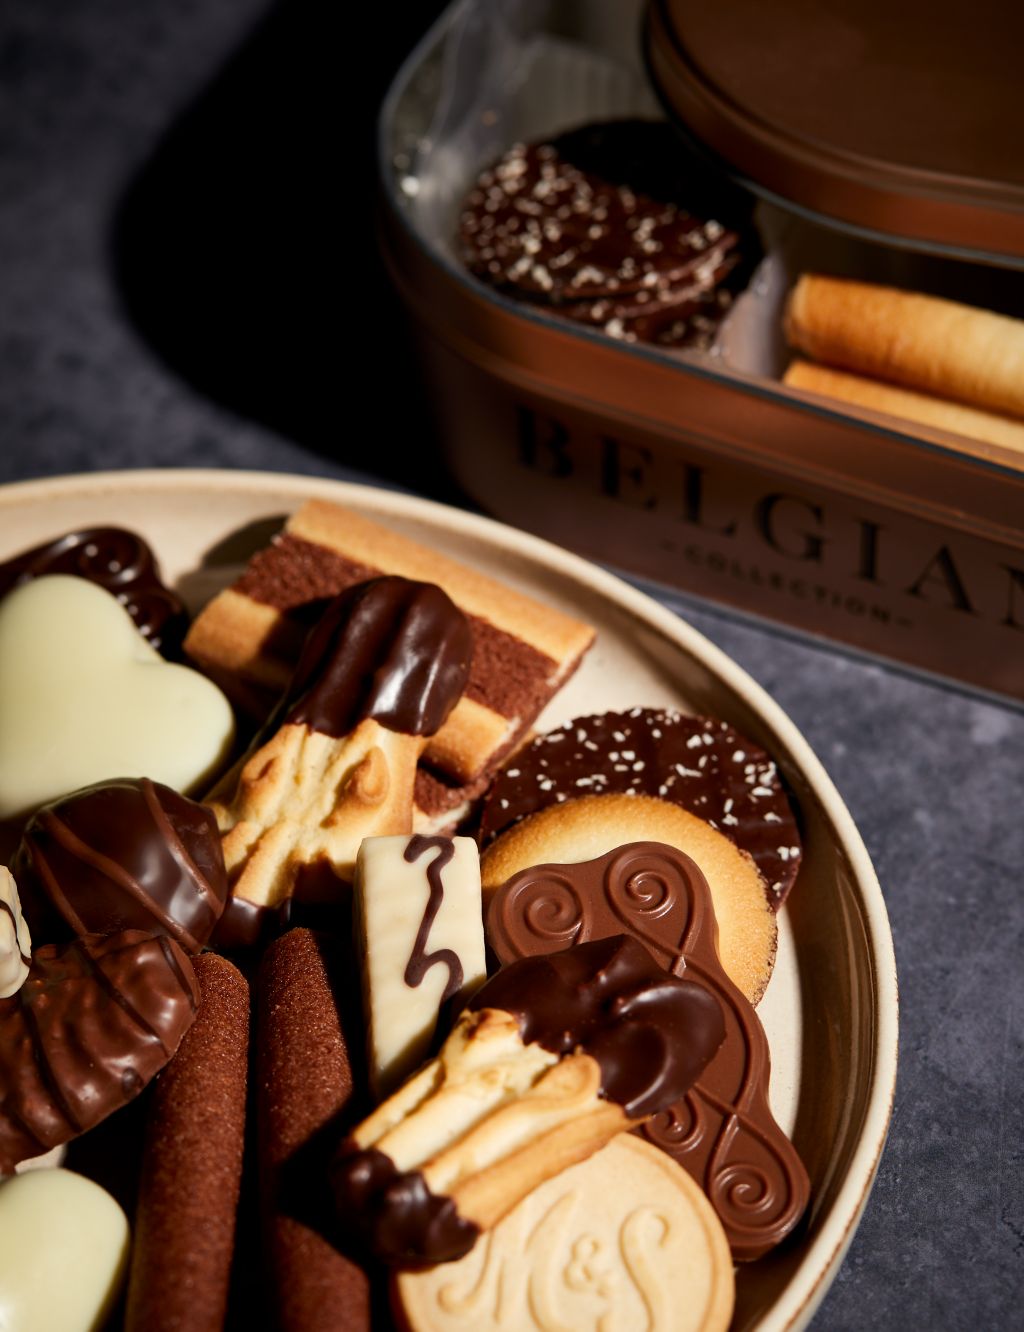 The Belgian Chocolate Gift Bag